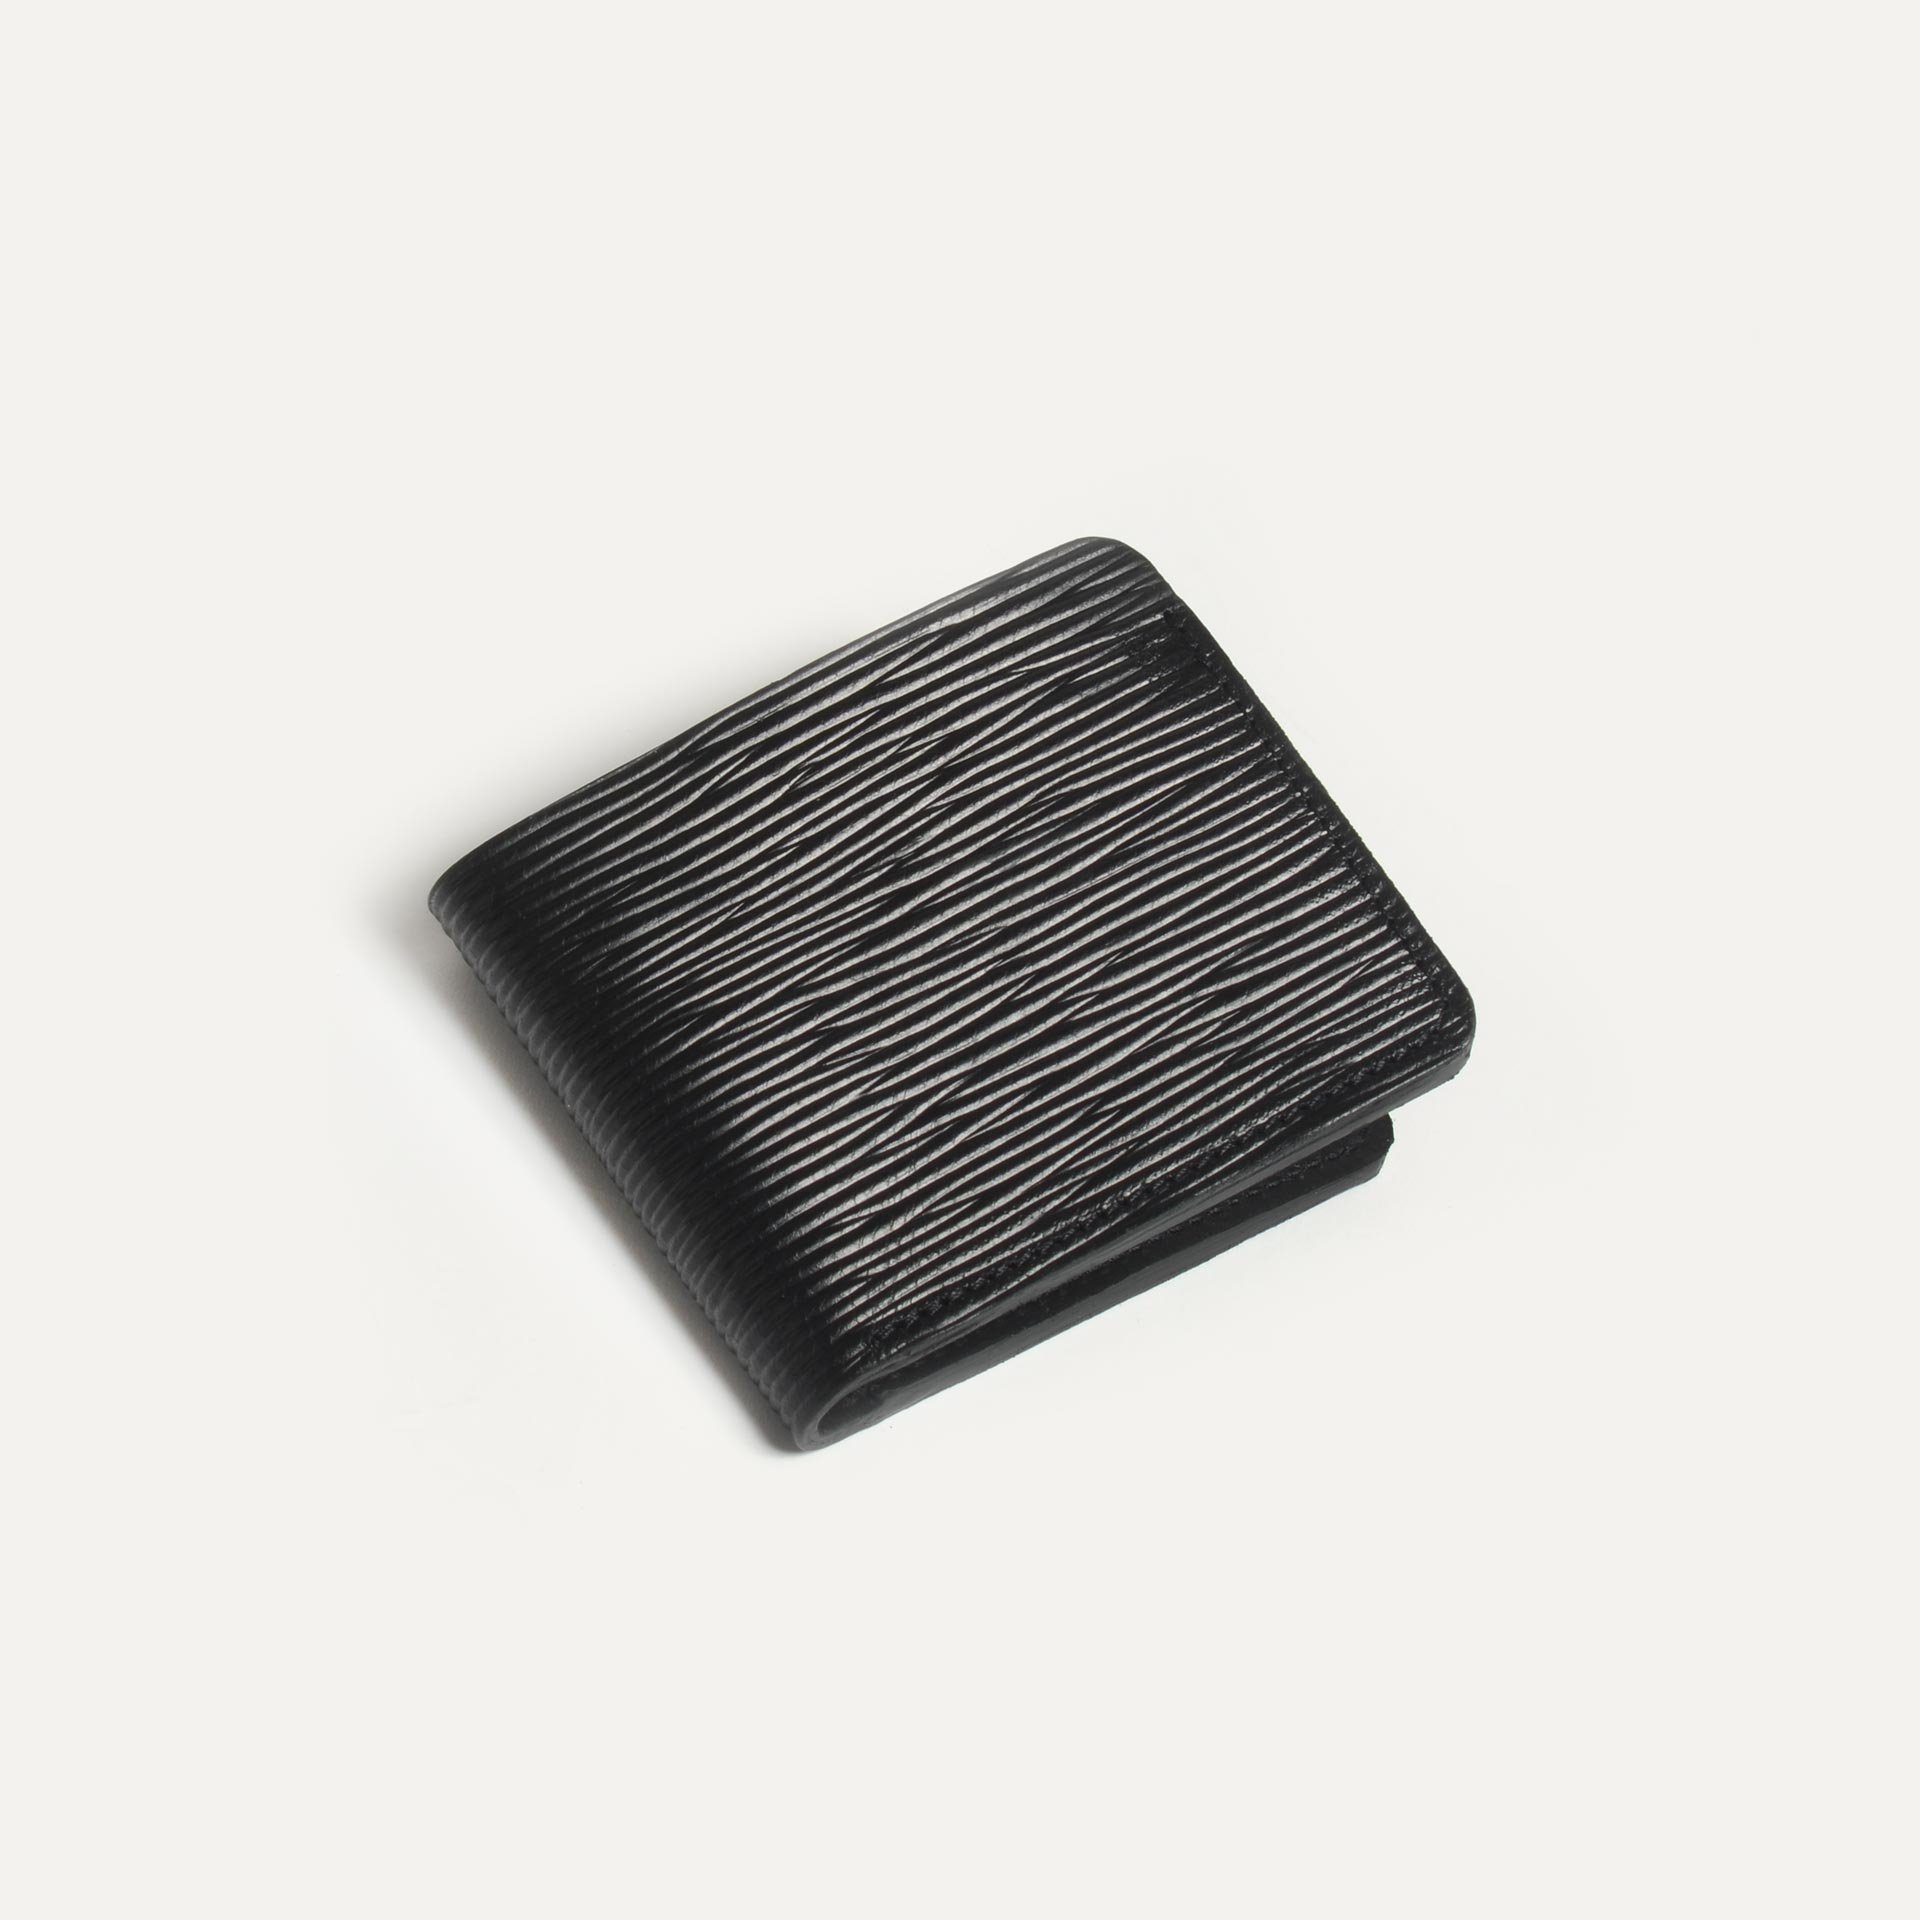 PEZE wallet - black épi leather (image n°2)